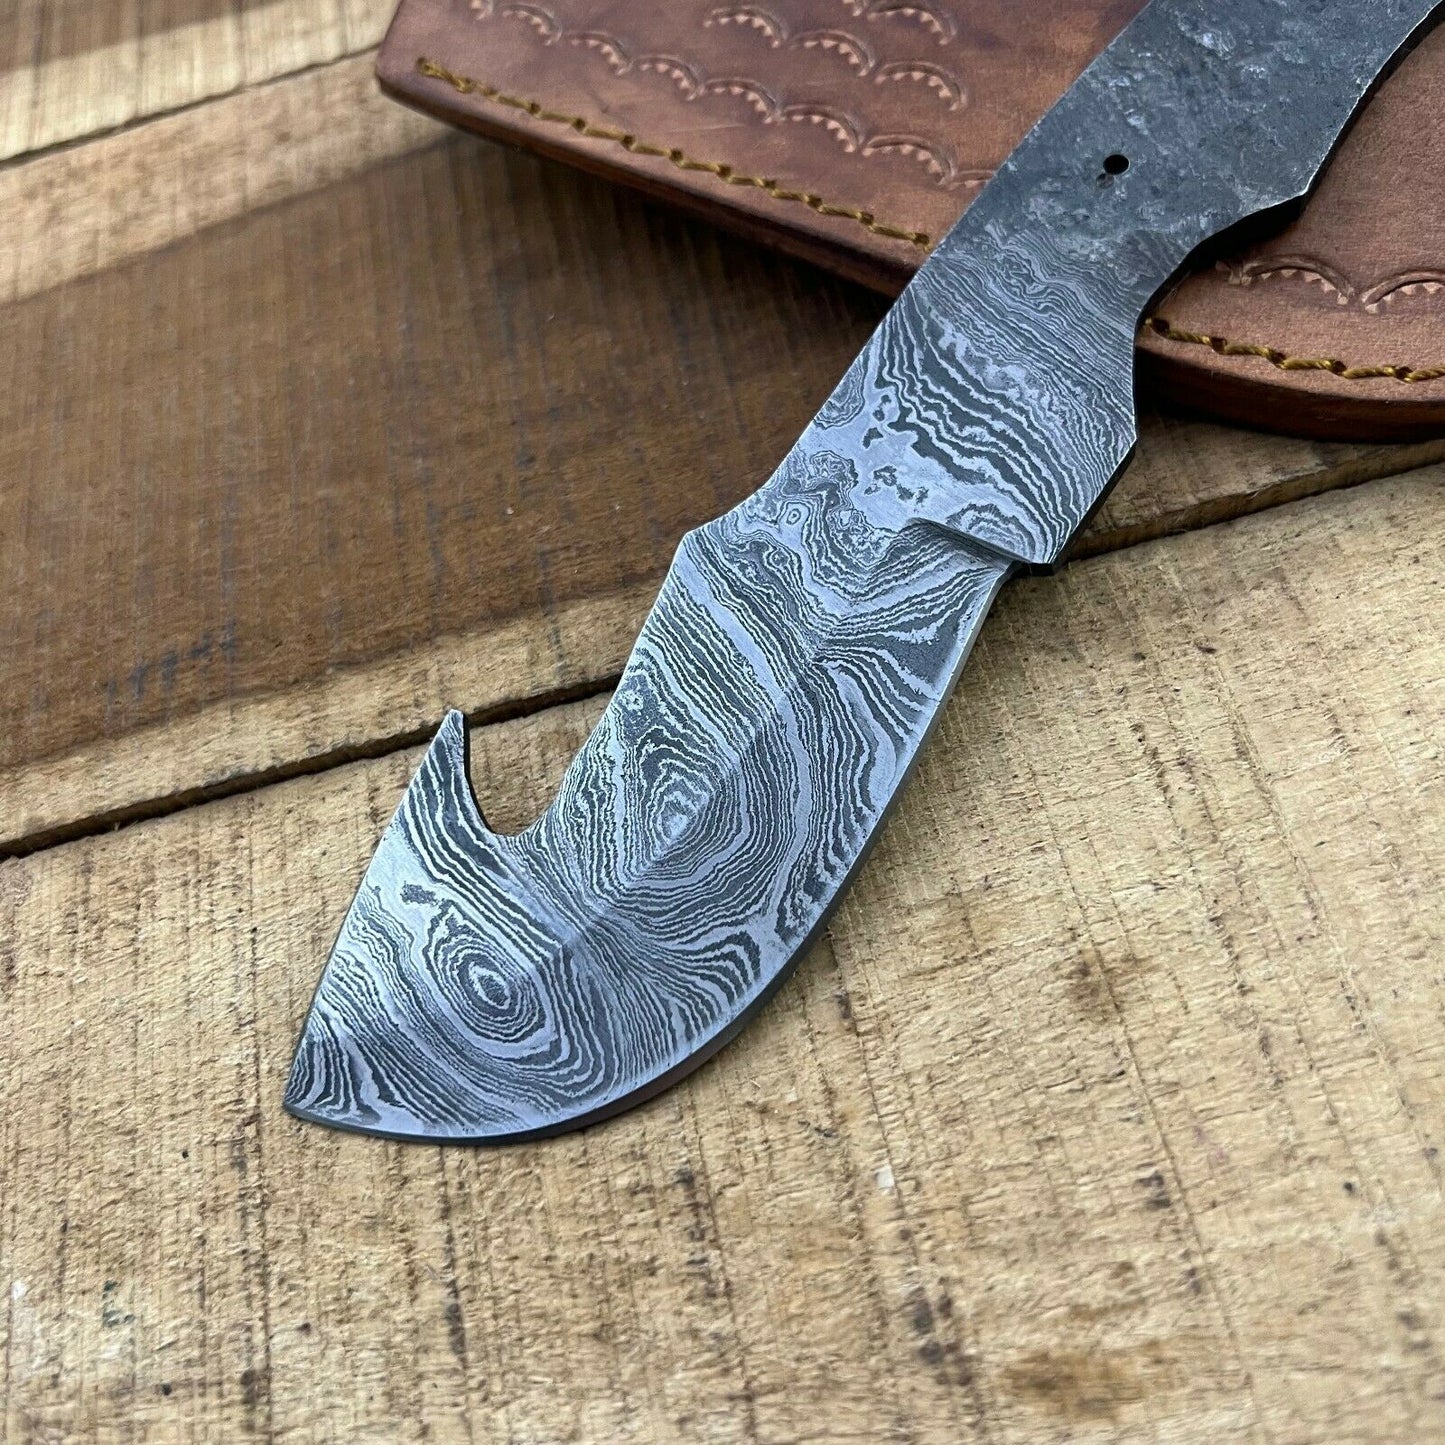 SHARDBLADE Custom Hand Forged Damascus Steel Hunting Skinner Blank Blade knife